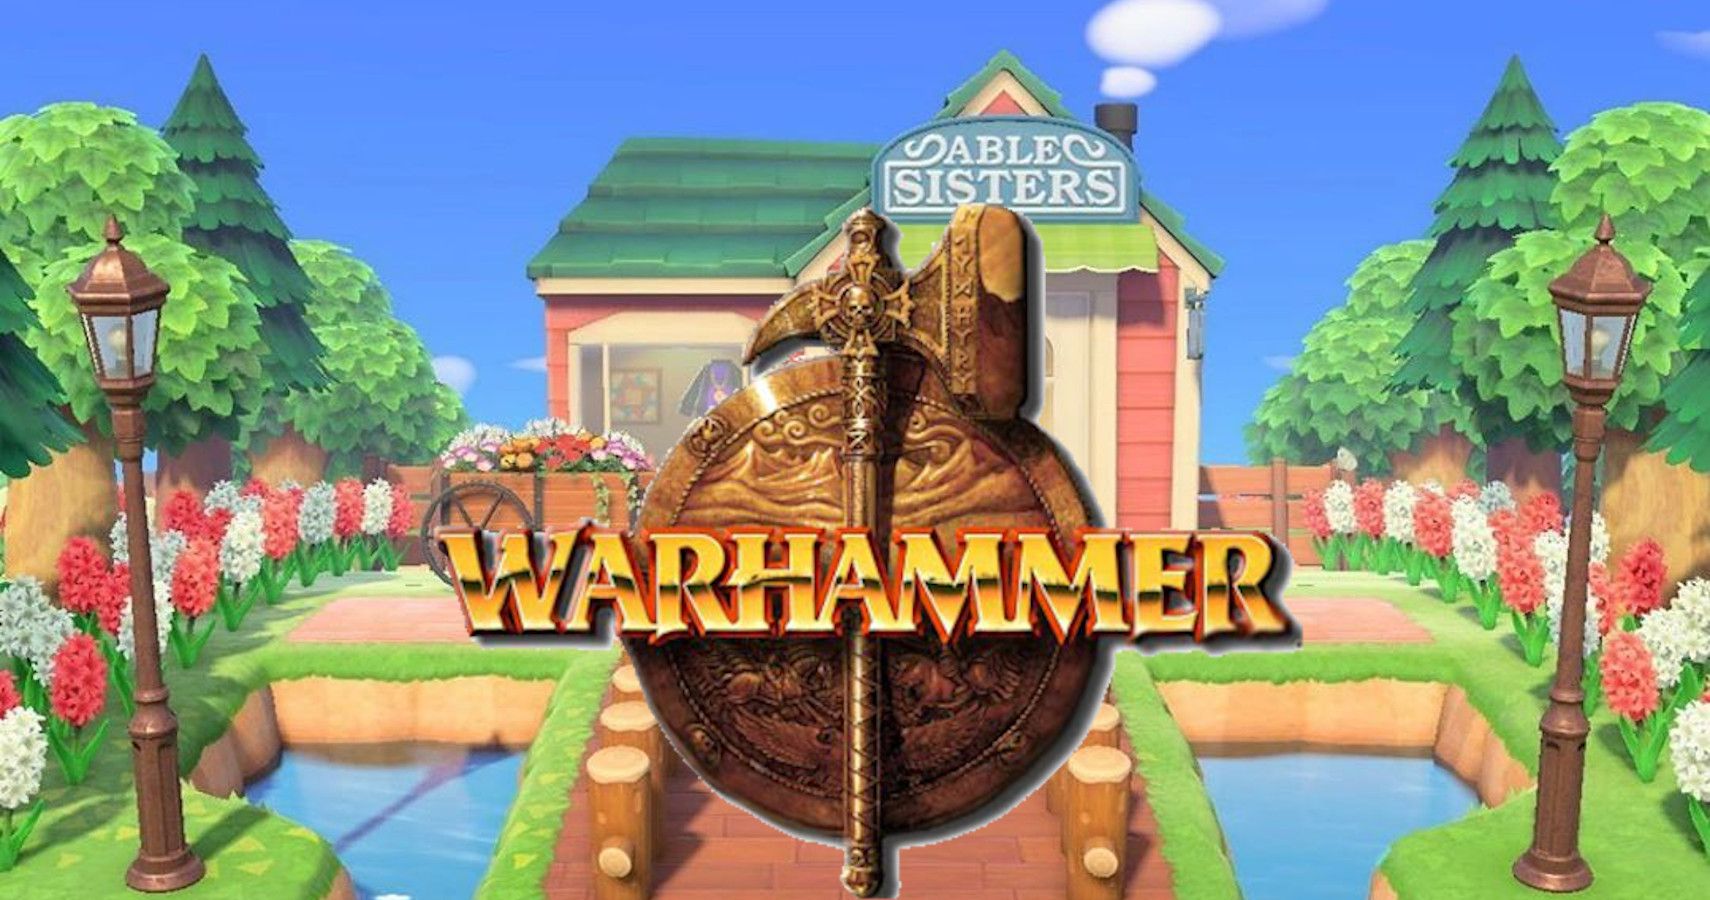 Warhammer Design Codes In Animal Crossing New Horizons